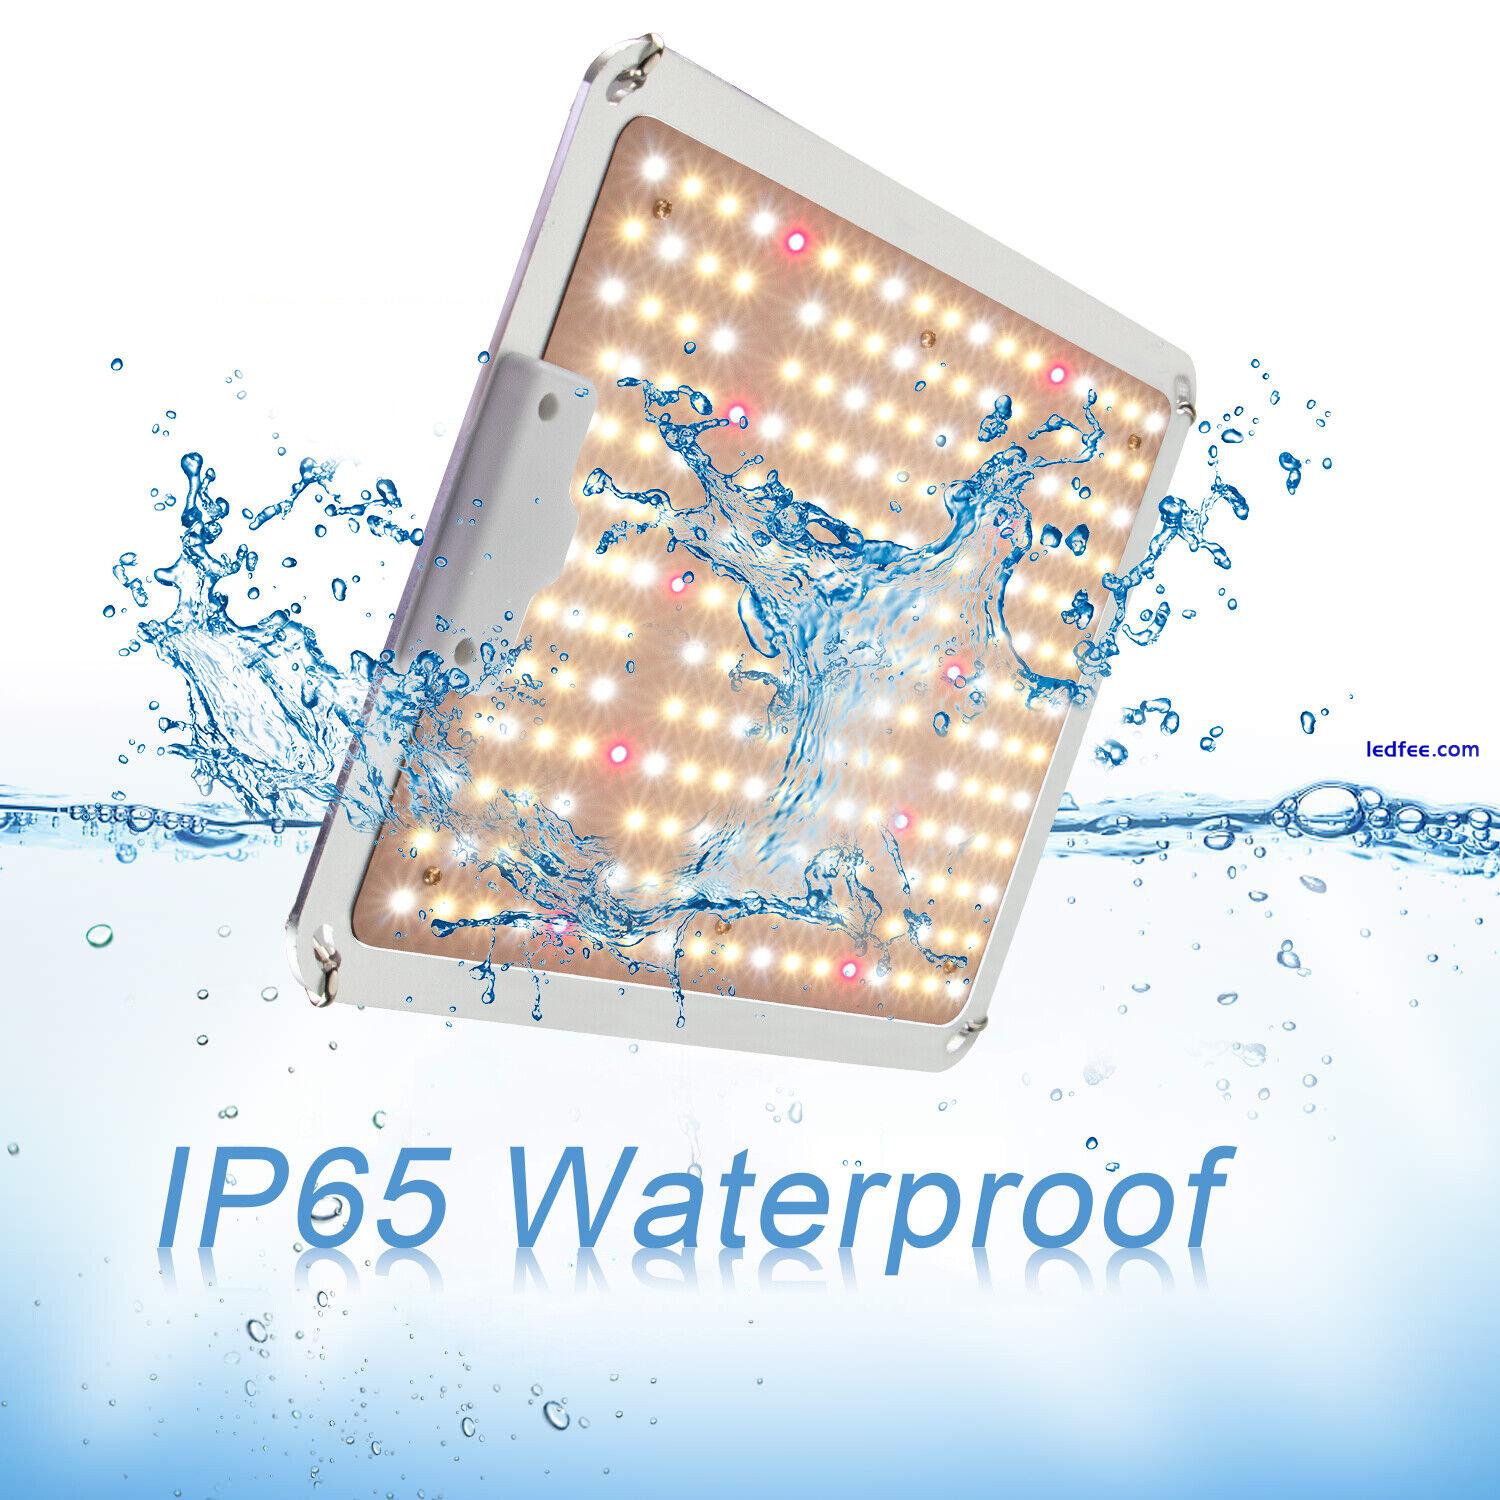 Waterproof IP65 QB1000 Hydroponic Plant Growing light lm301b 1000W LED Grow Lamp 2 